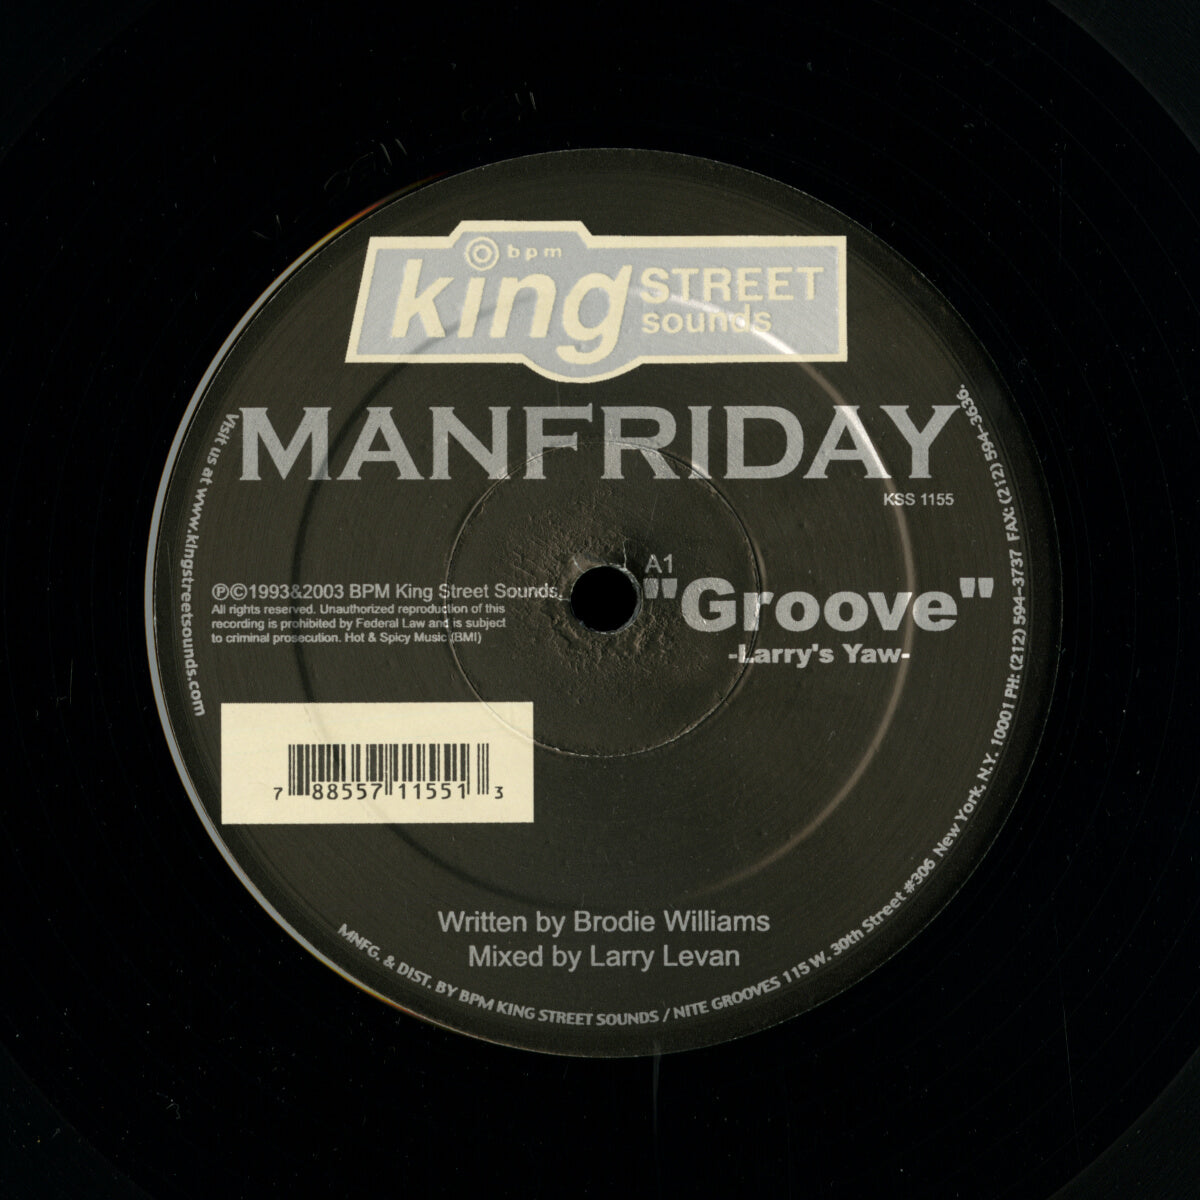 Man Friday – Groove / Winners